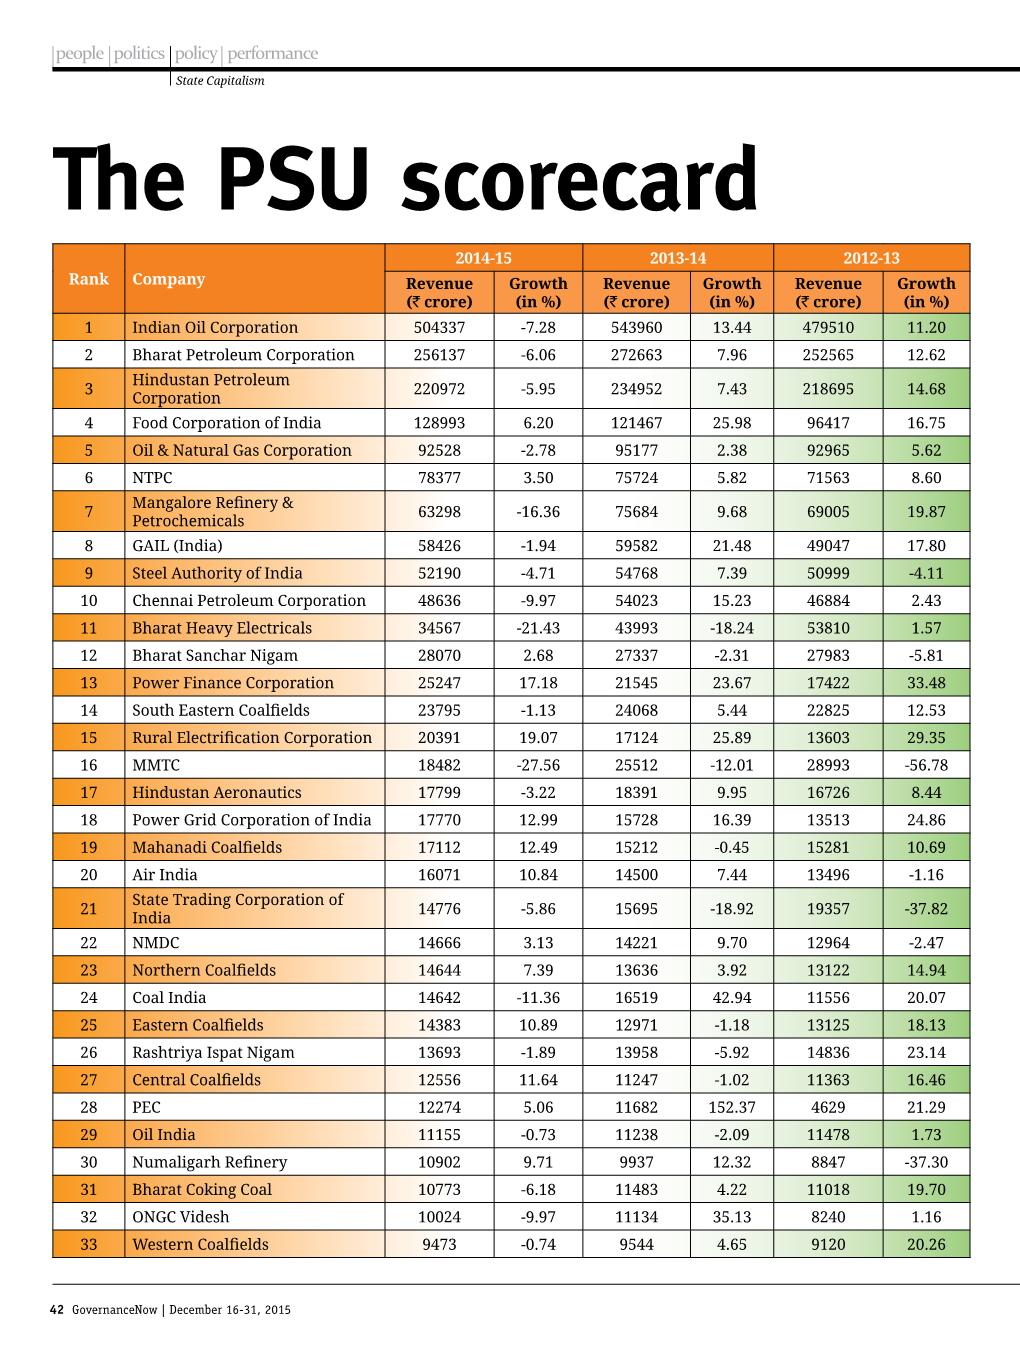 The Psu Scorecard